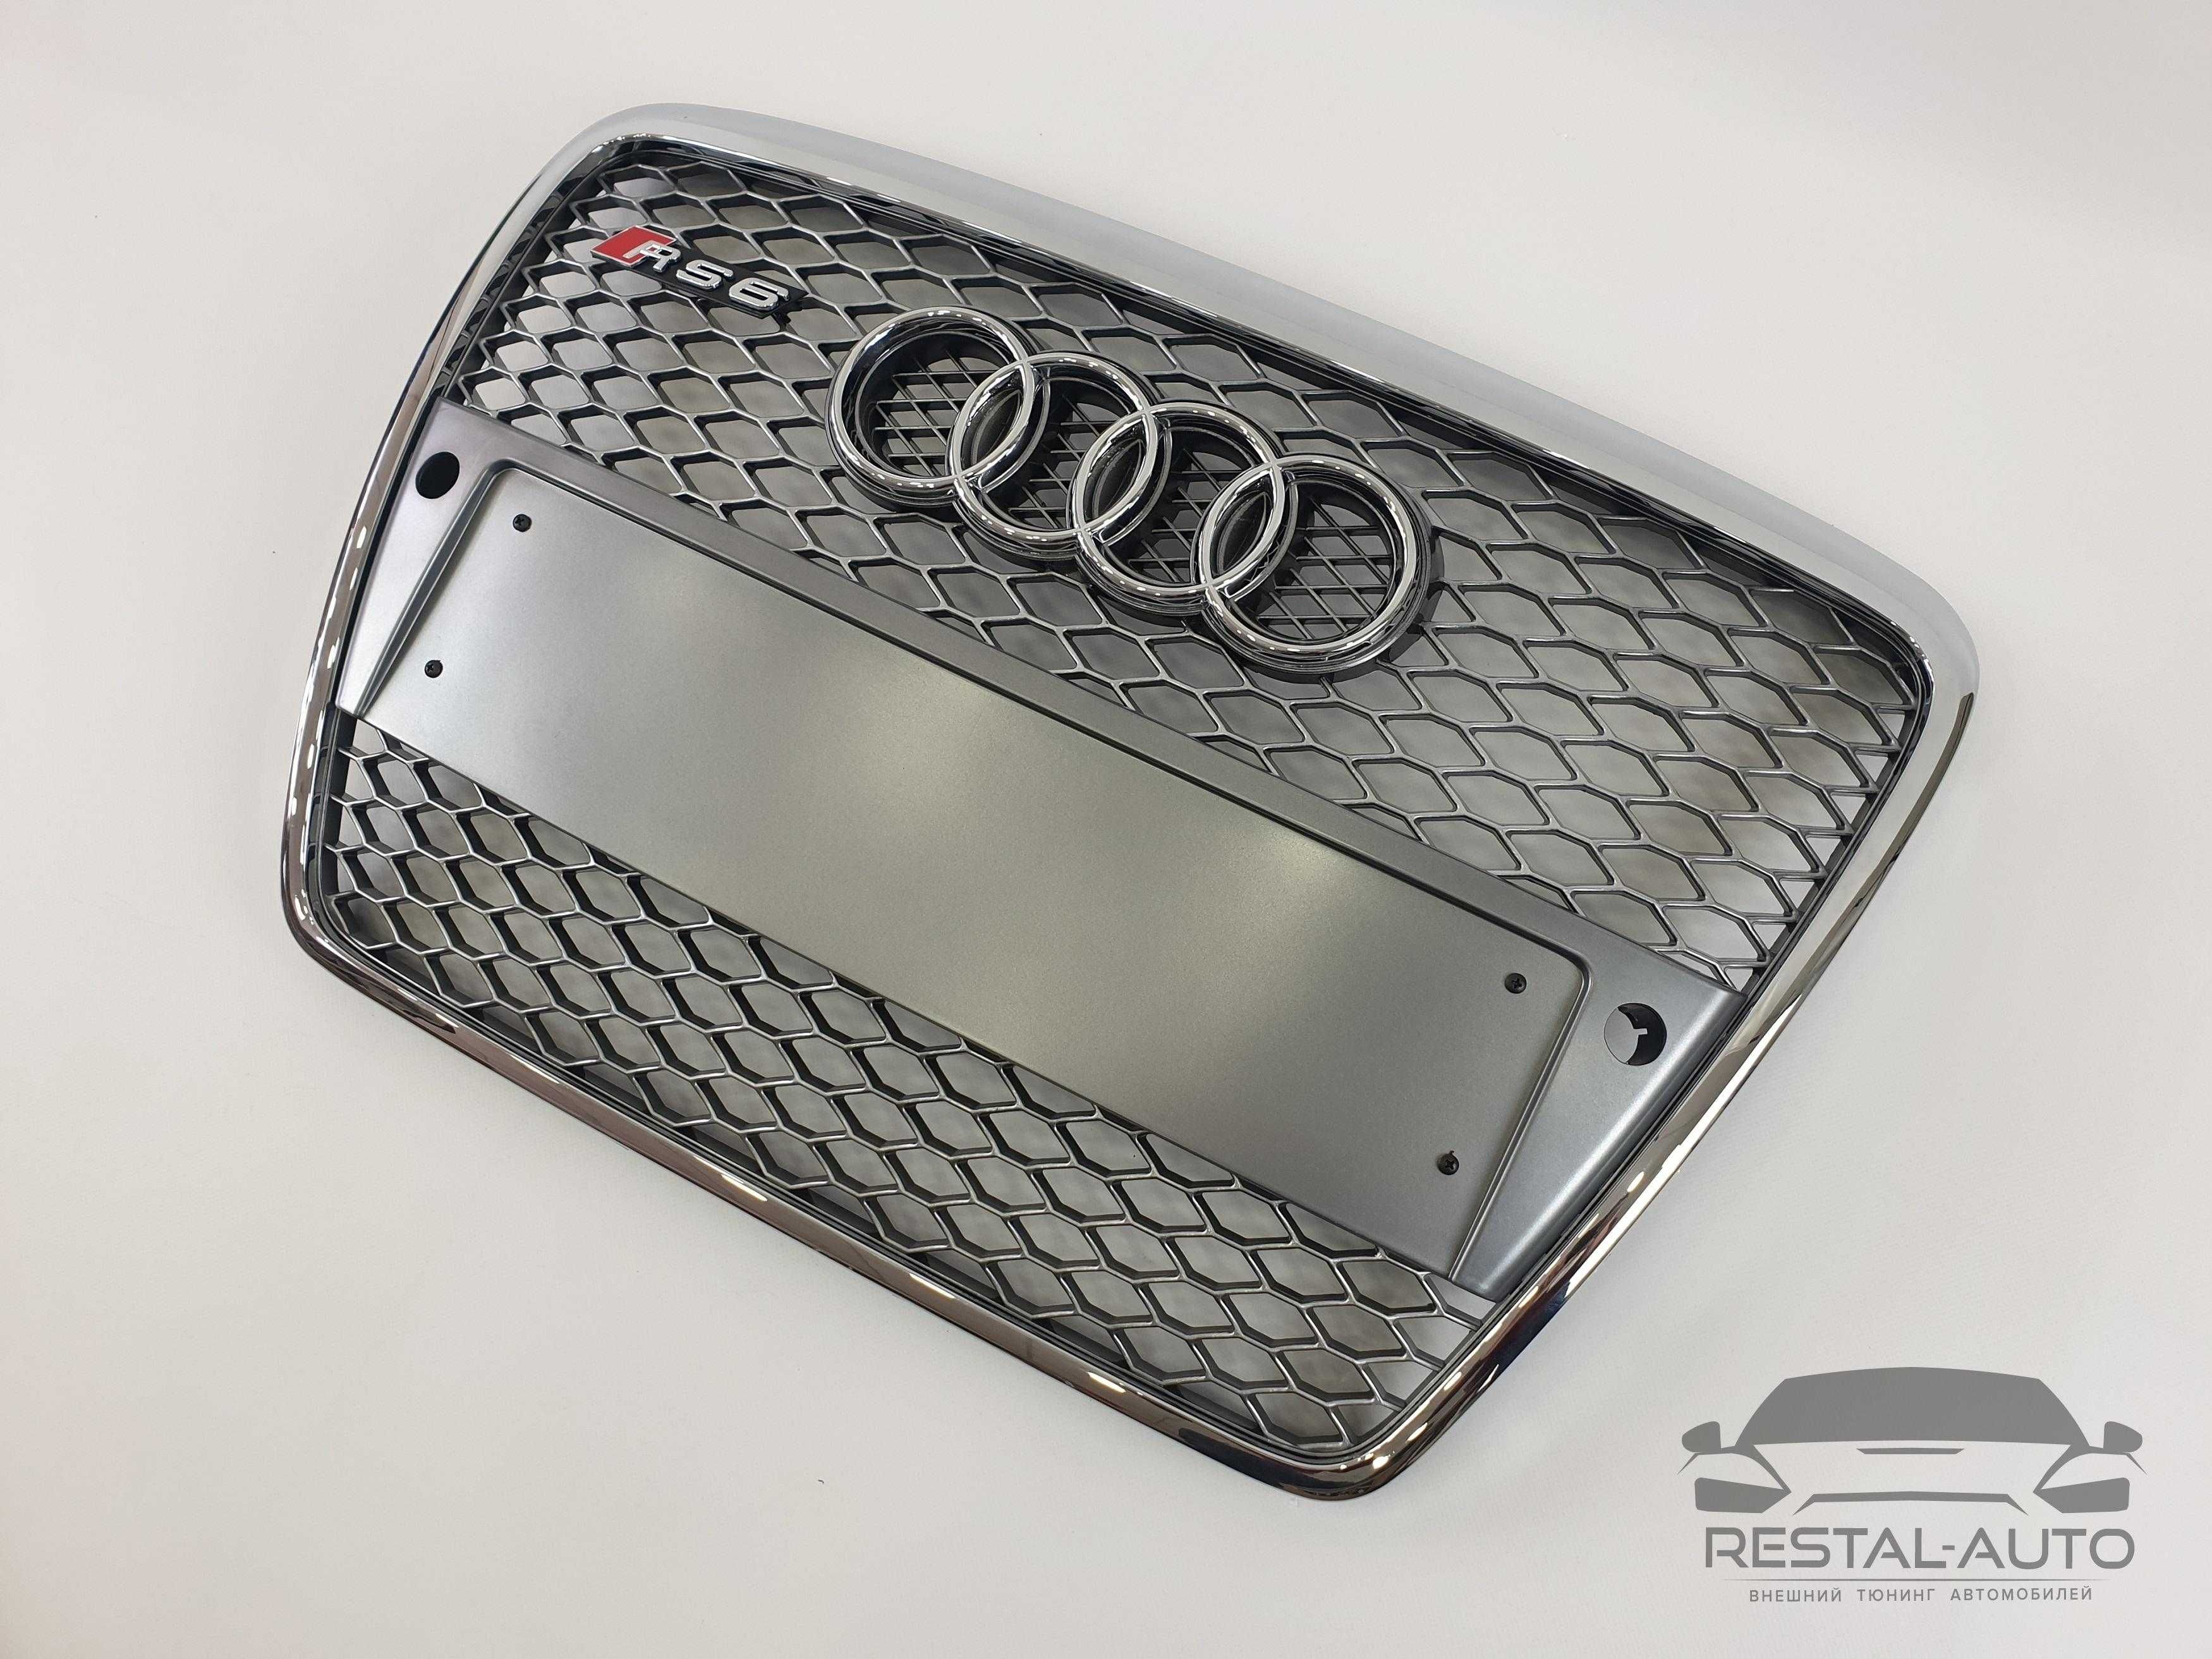 Решетка радиатора Audi A6 2004-2011 г в стиле RS